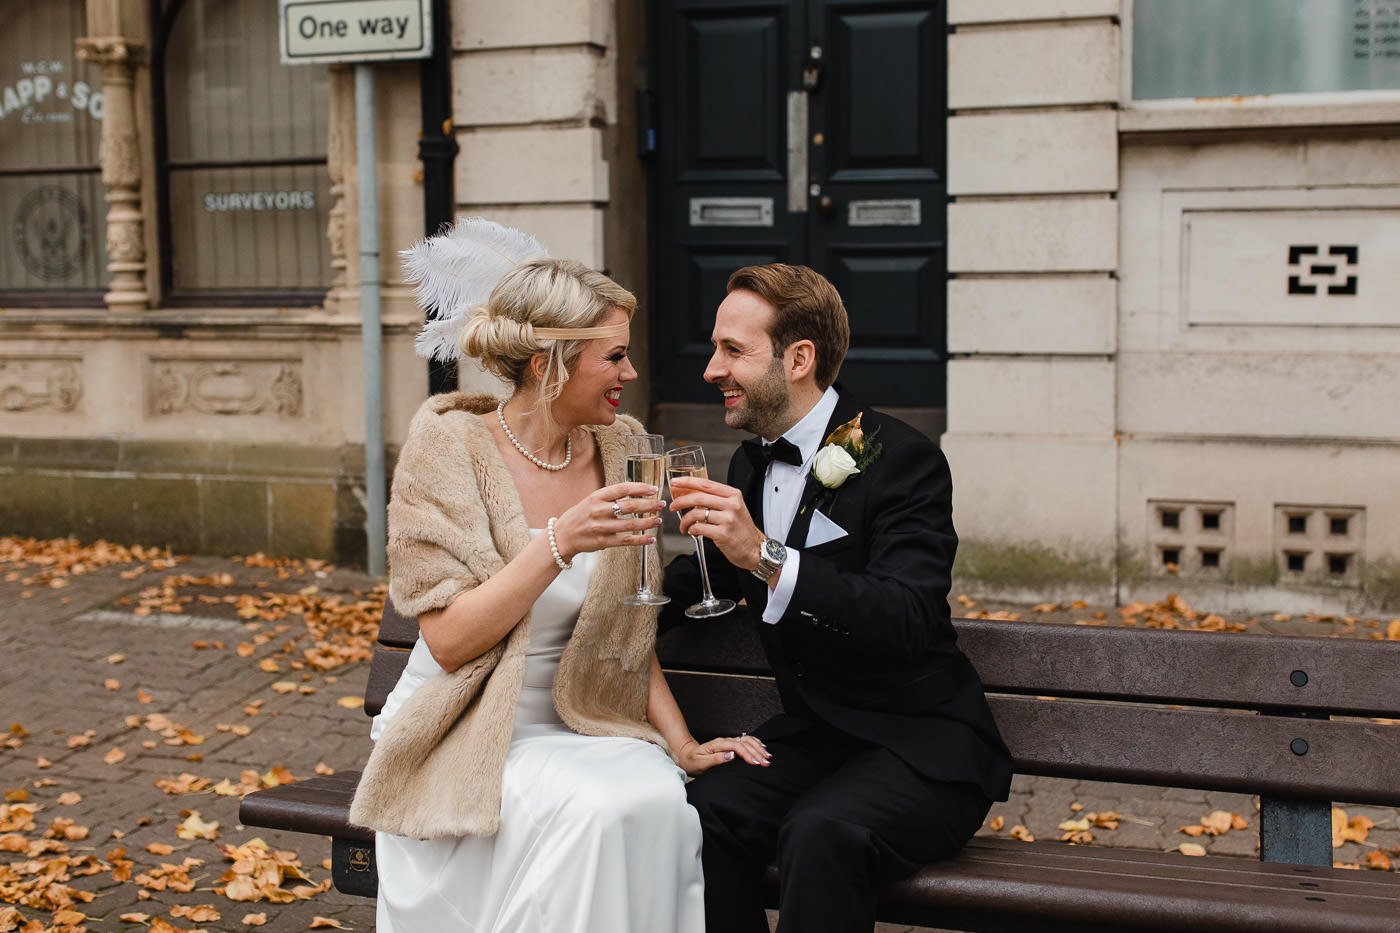 22-bride-groom-toasting-champagne-bench.jpg